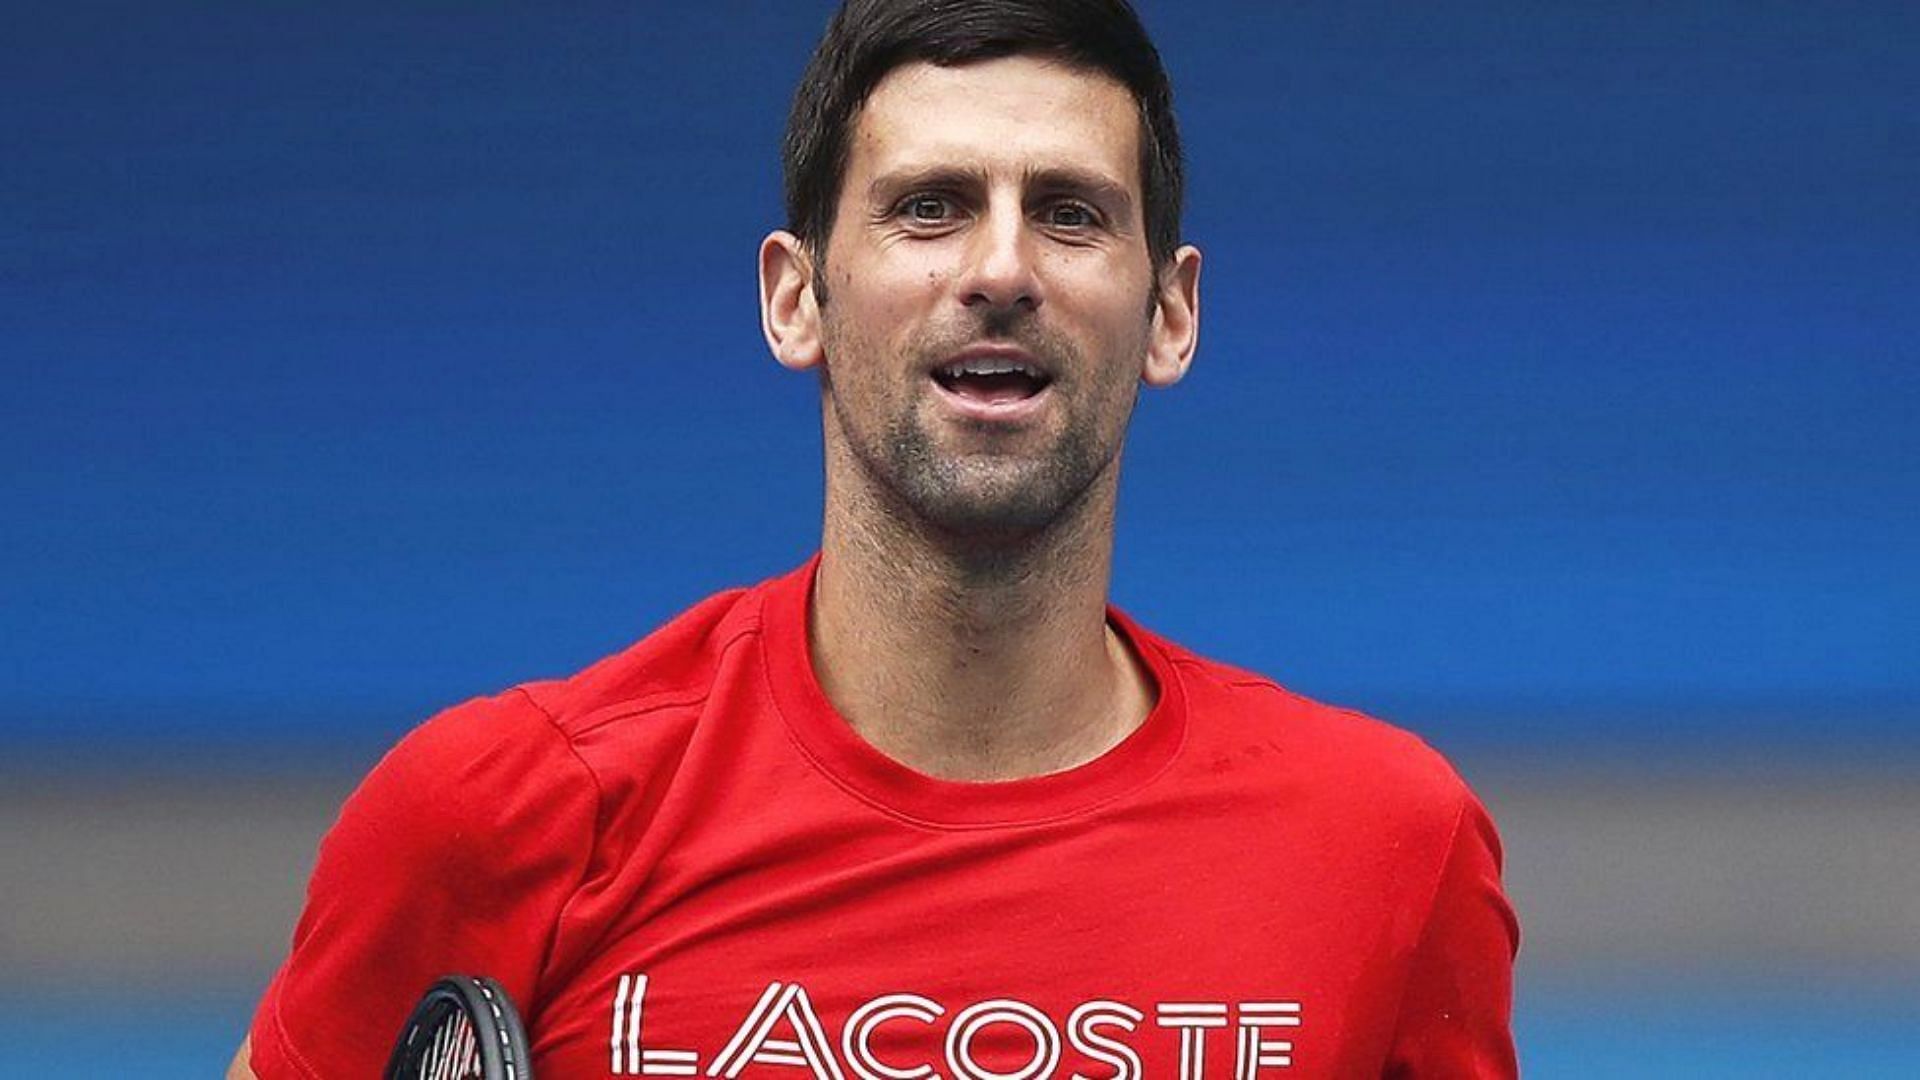 Novak Djokovic had his visa canceled by the Australian Government.